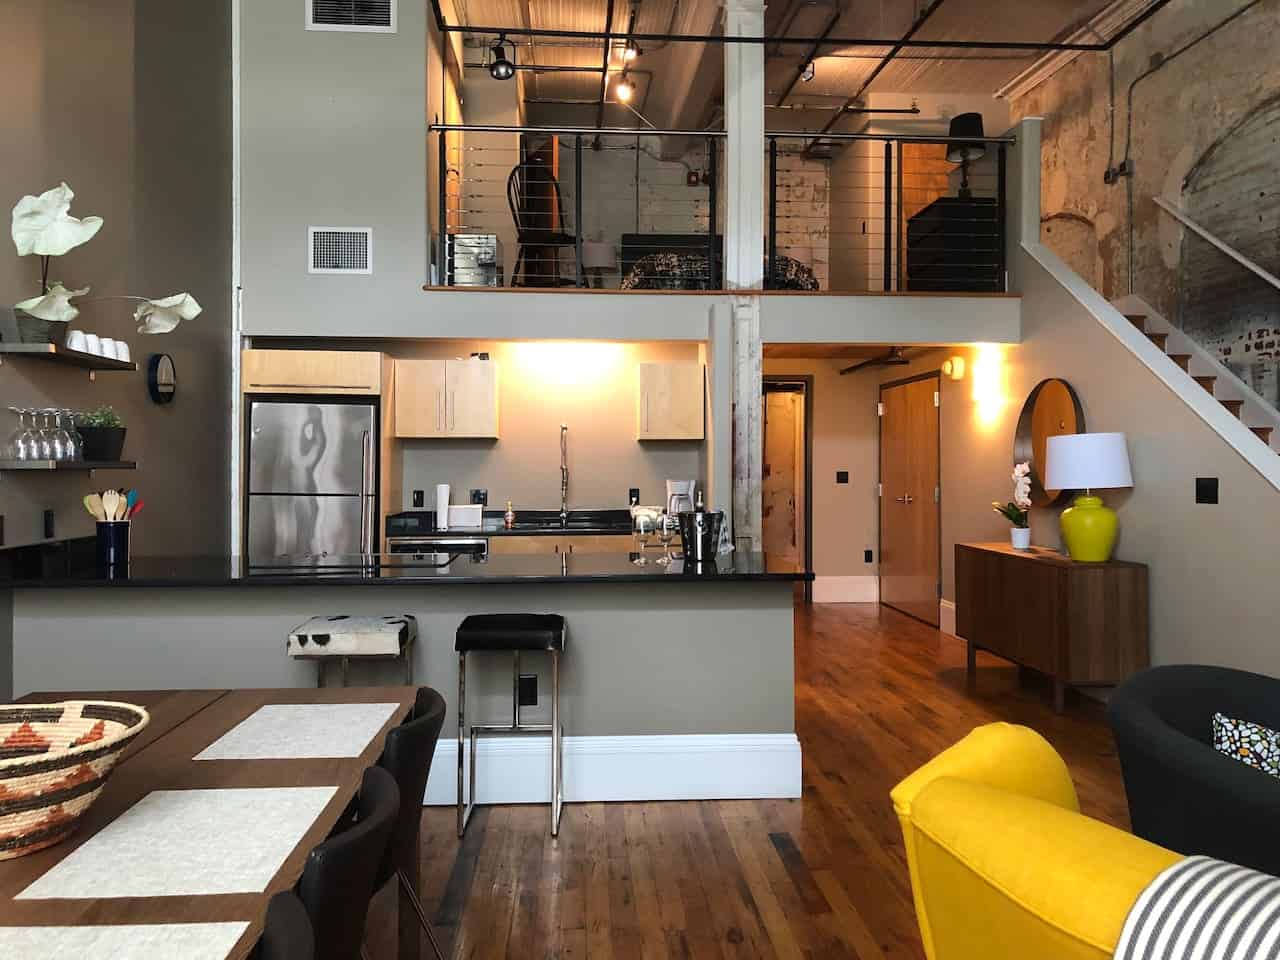 Image of Airbnb rental in Columbia, South Carolina